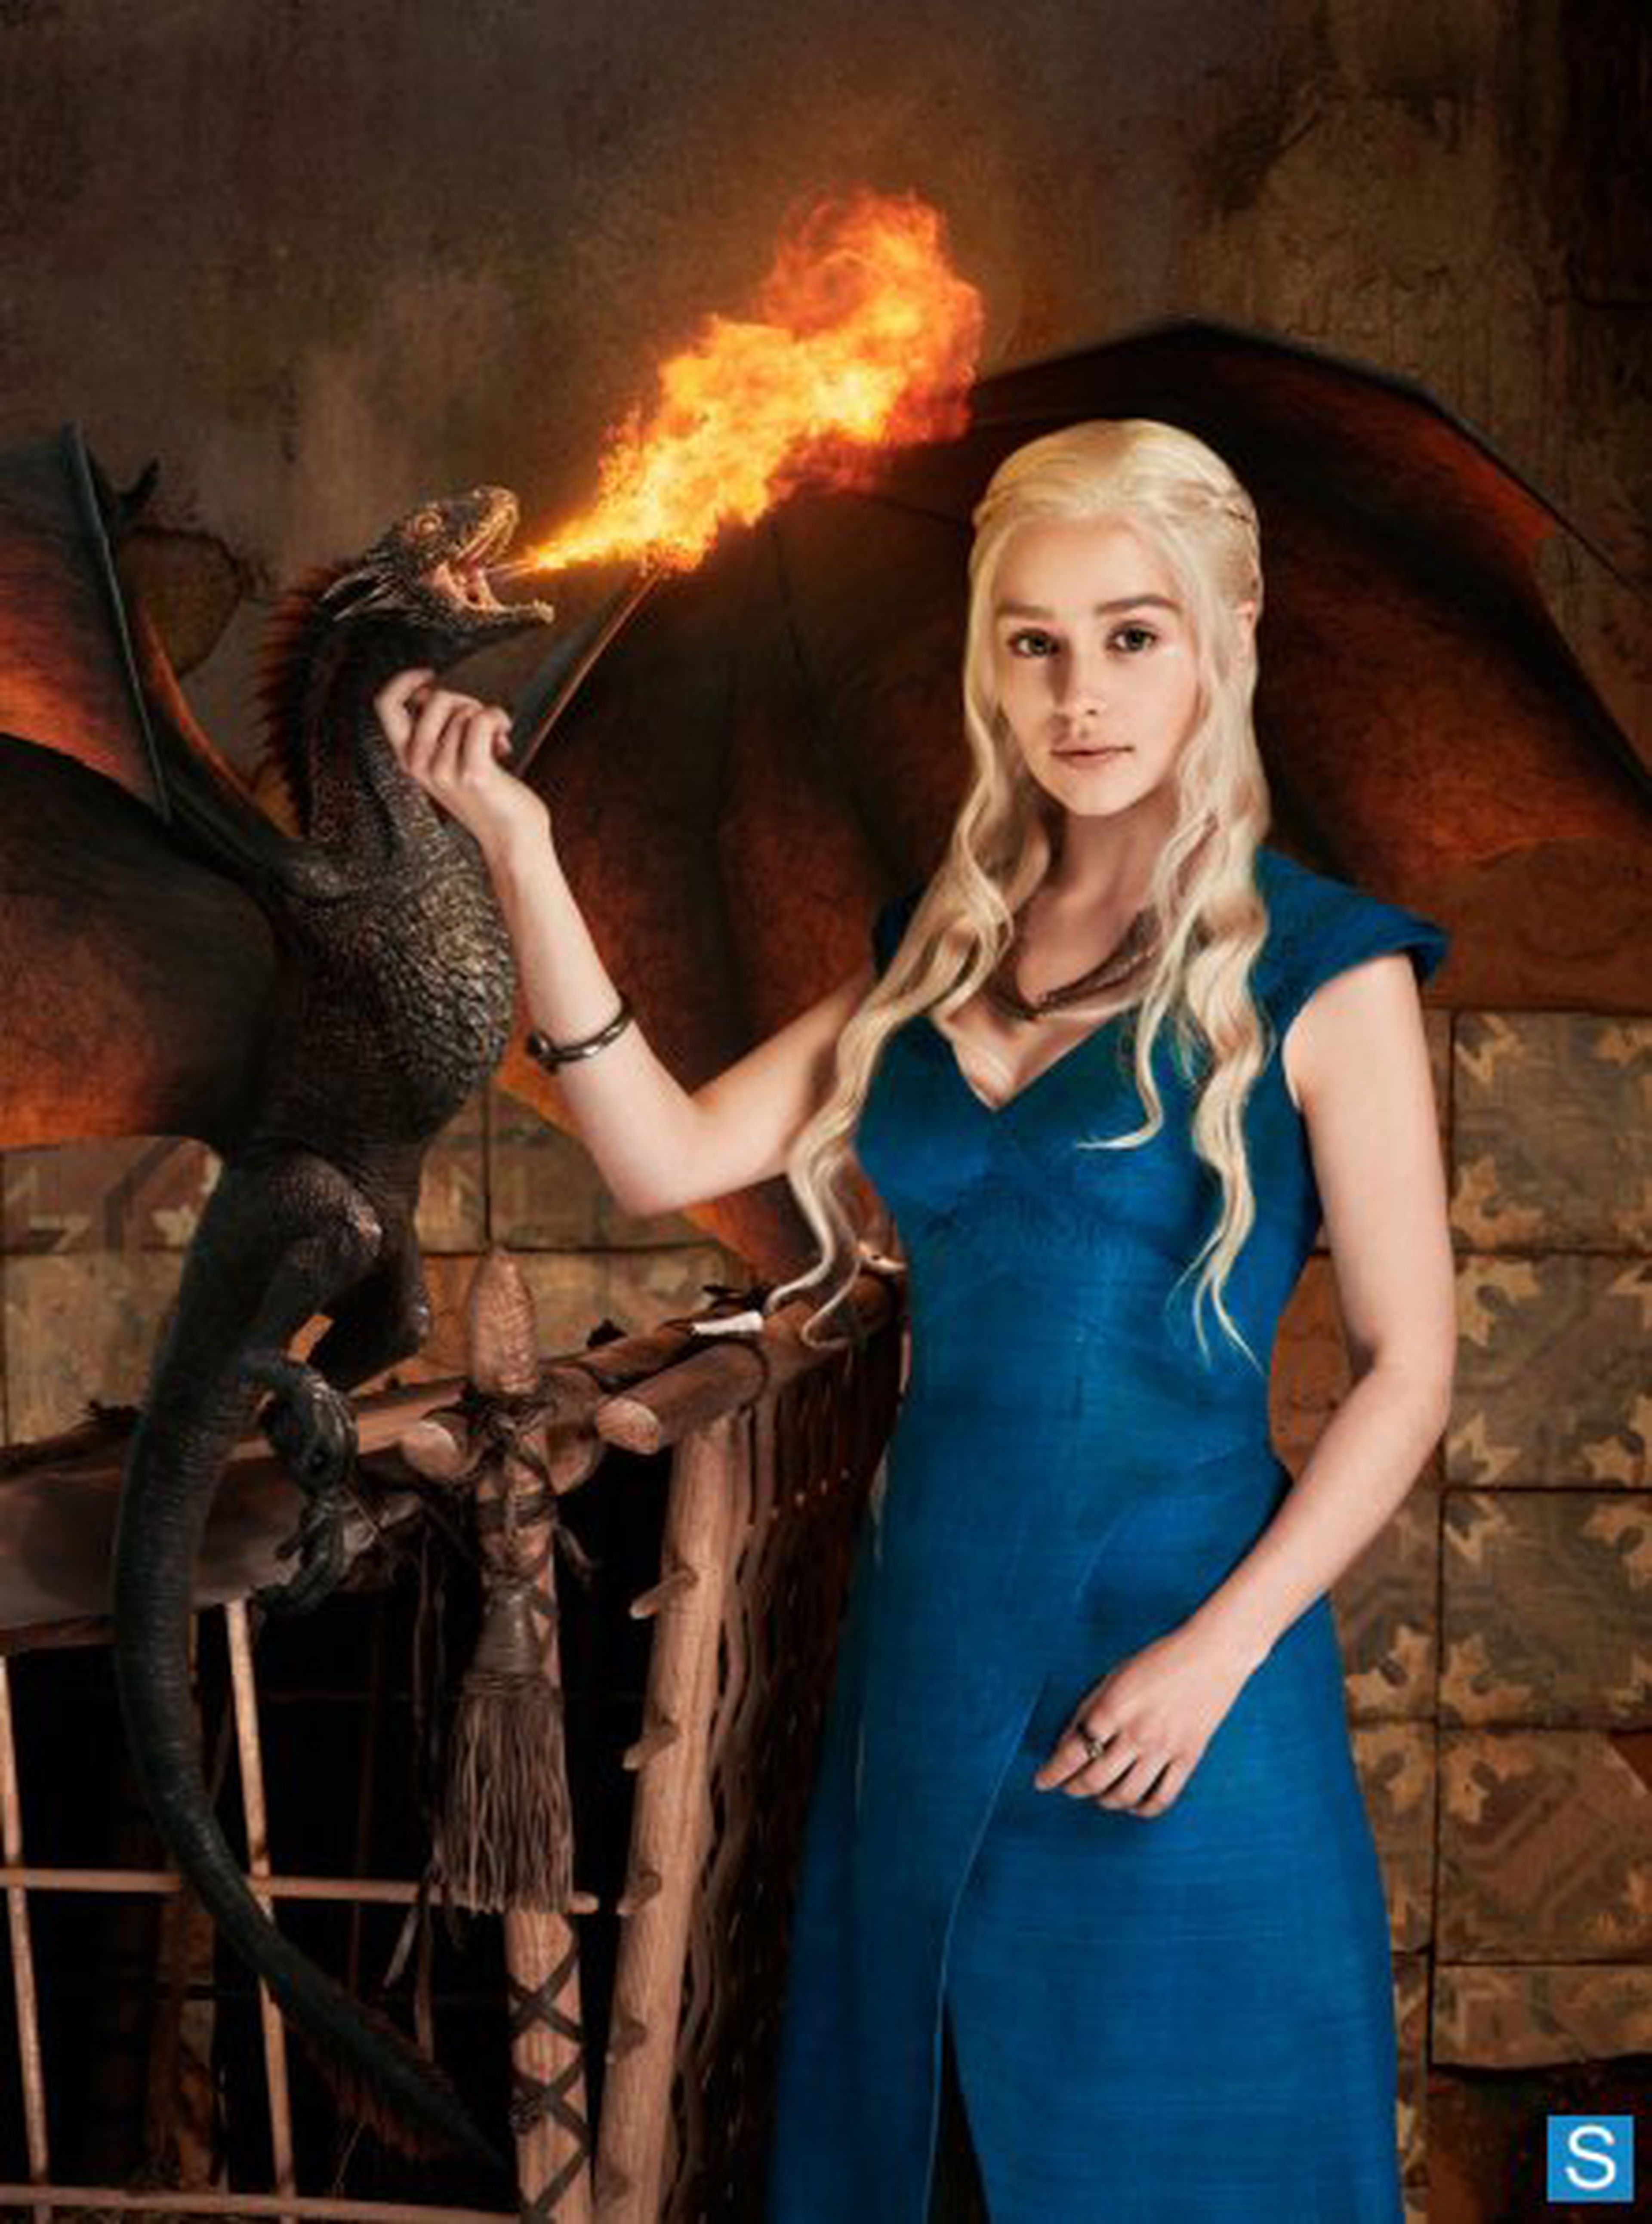 Conoce a los dragones de Daenerys Targaryen